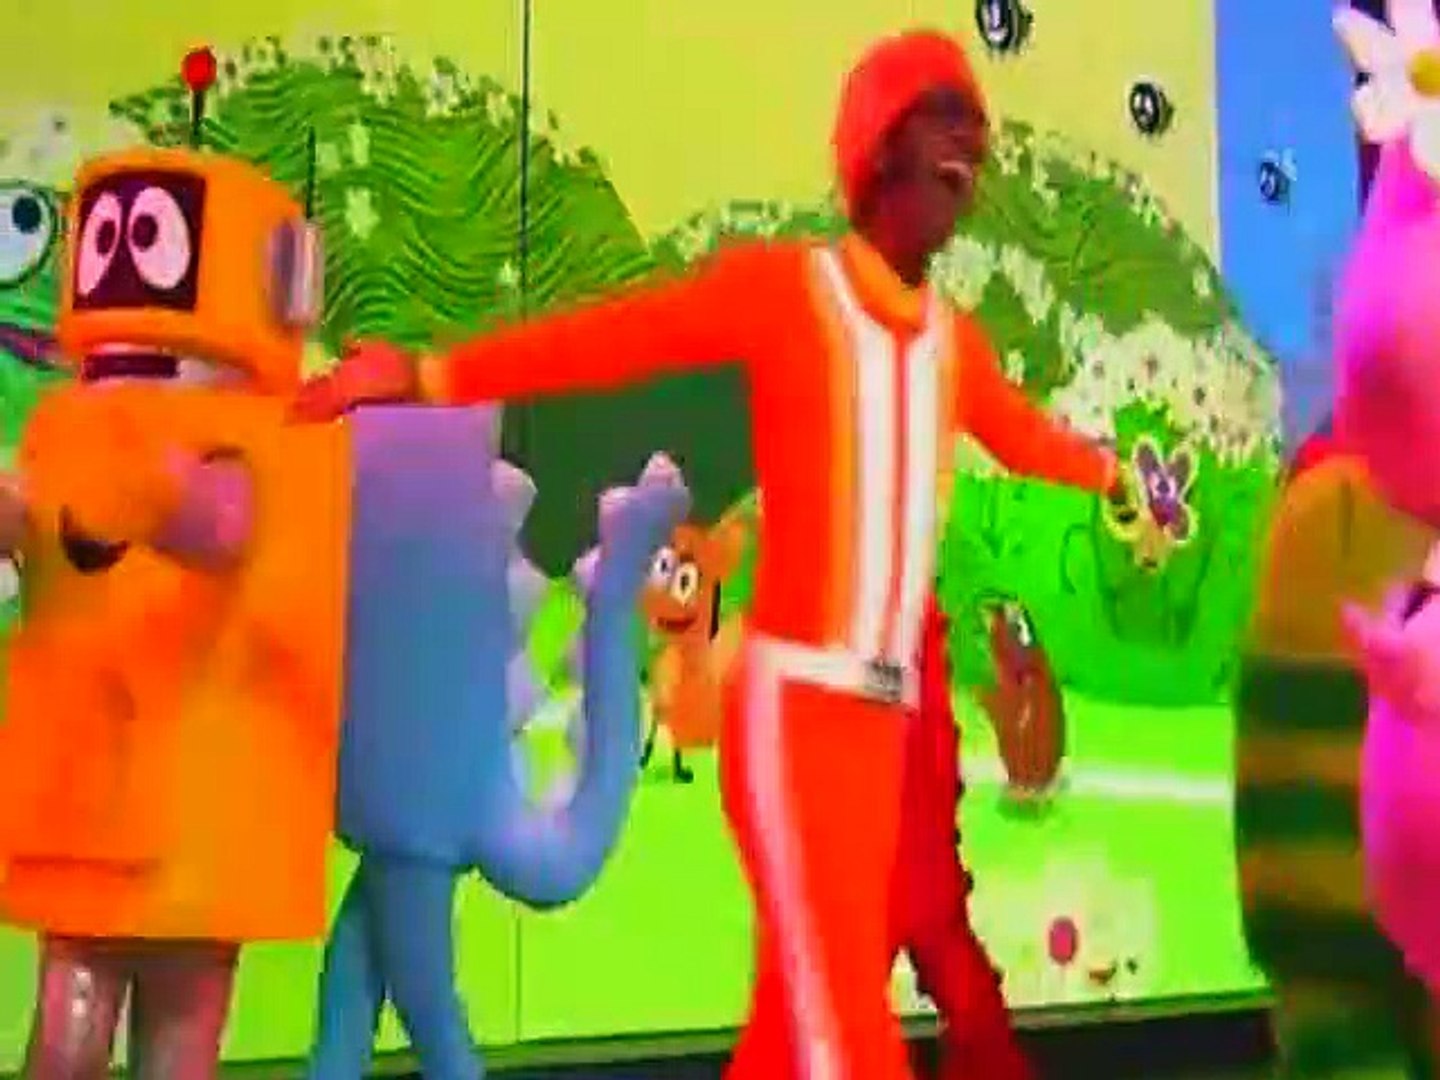 Yo Gabba Gabba Musical Boombox Playset Toy- - video Dailymotion